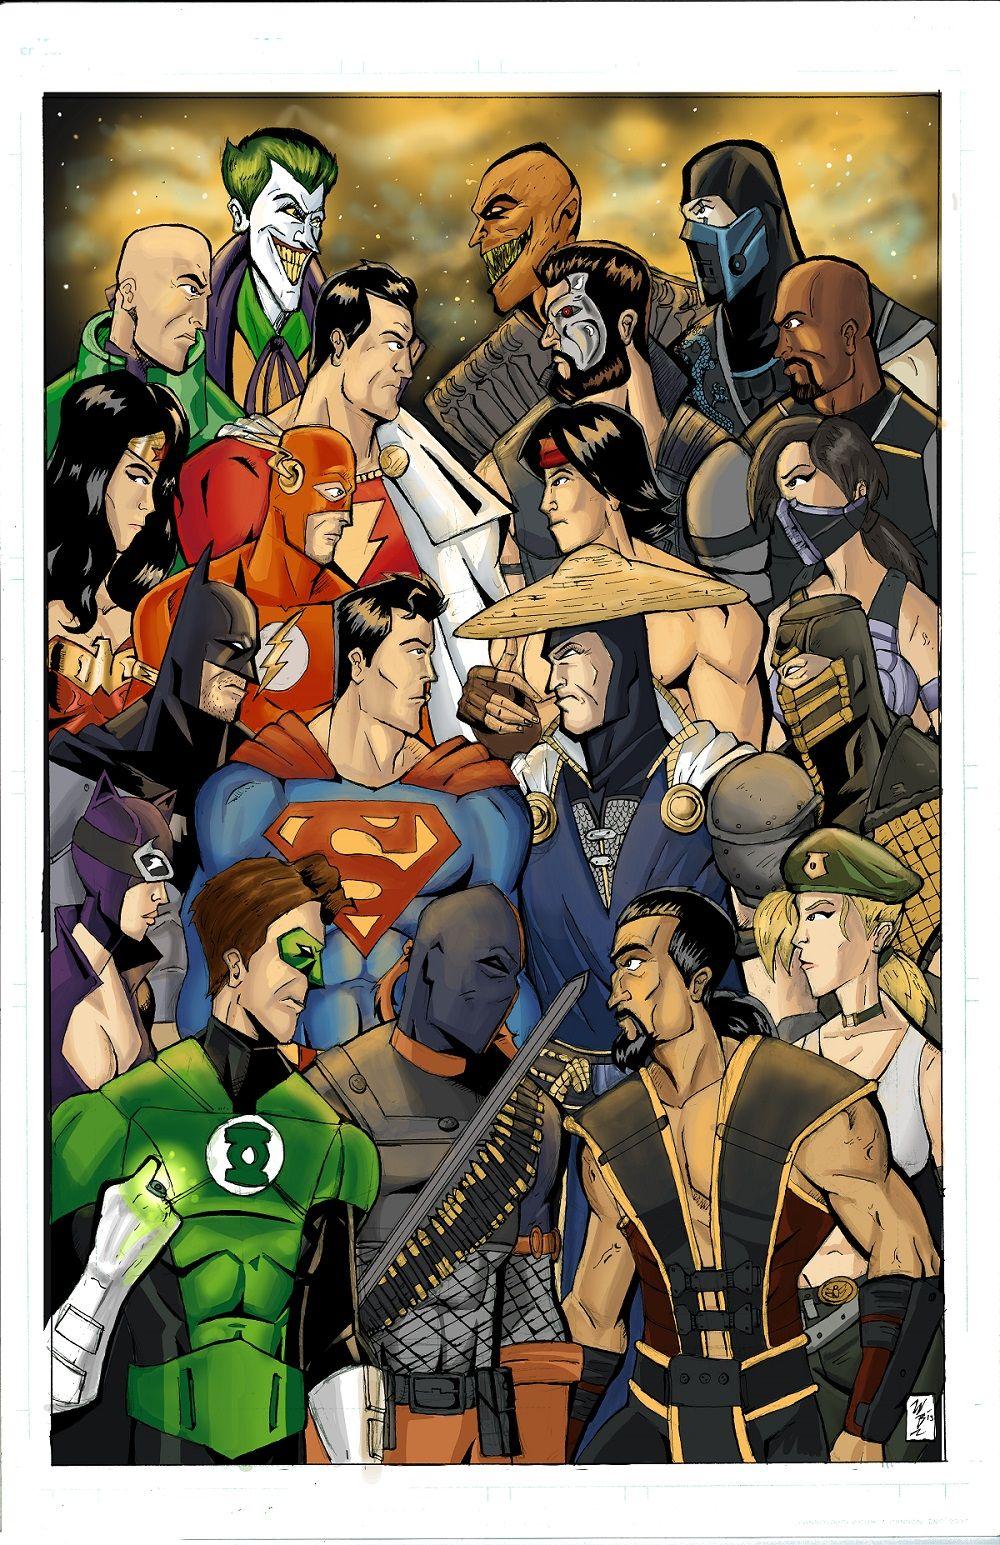 Mortal Kombat vs DC Universe Wallpapers - Top Free Mortal ...